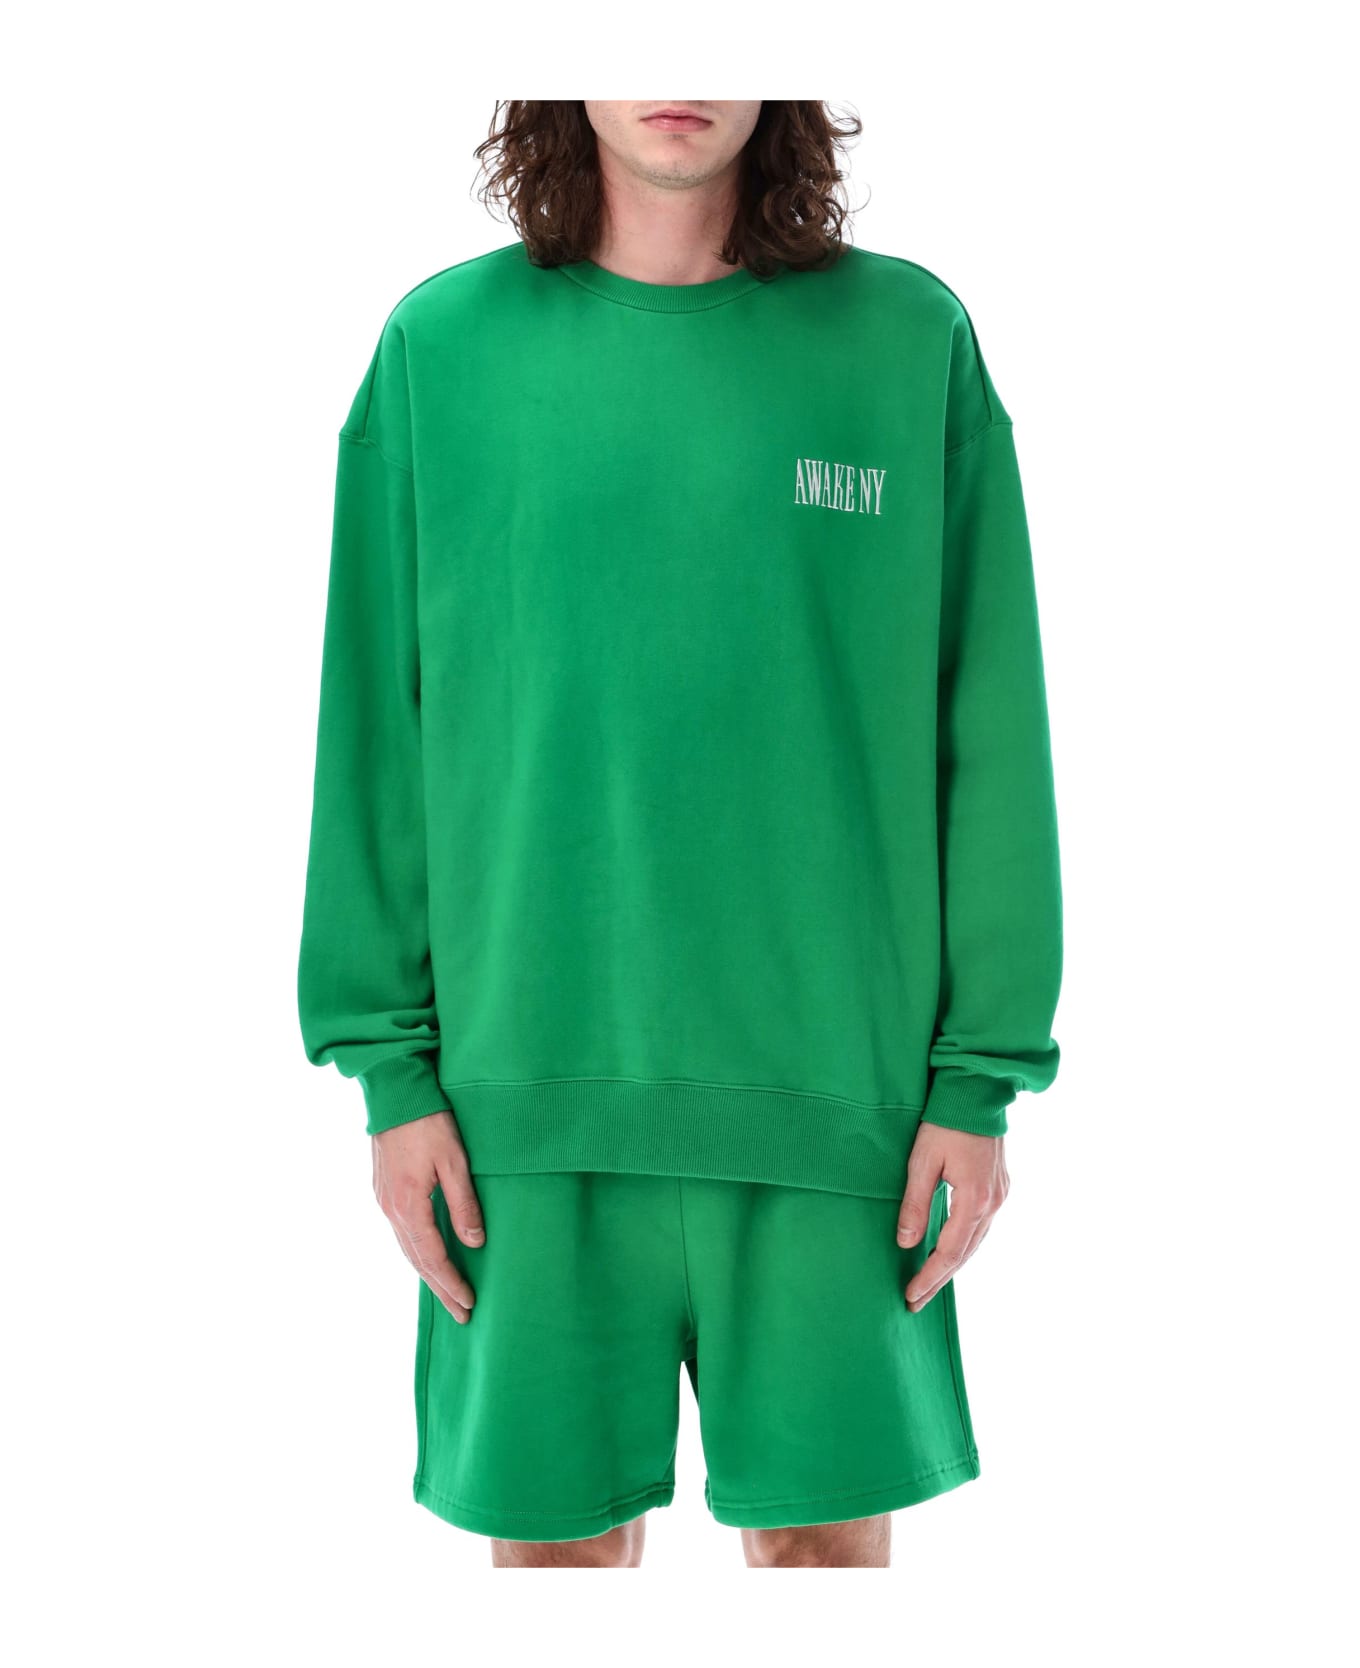 Awake NY Crewneck Sweatshirt - GREEN